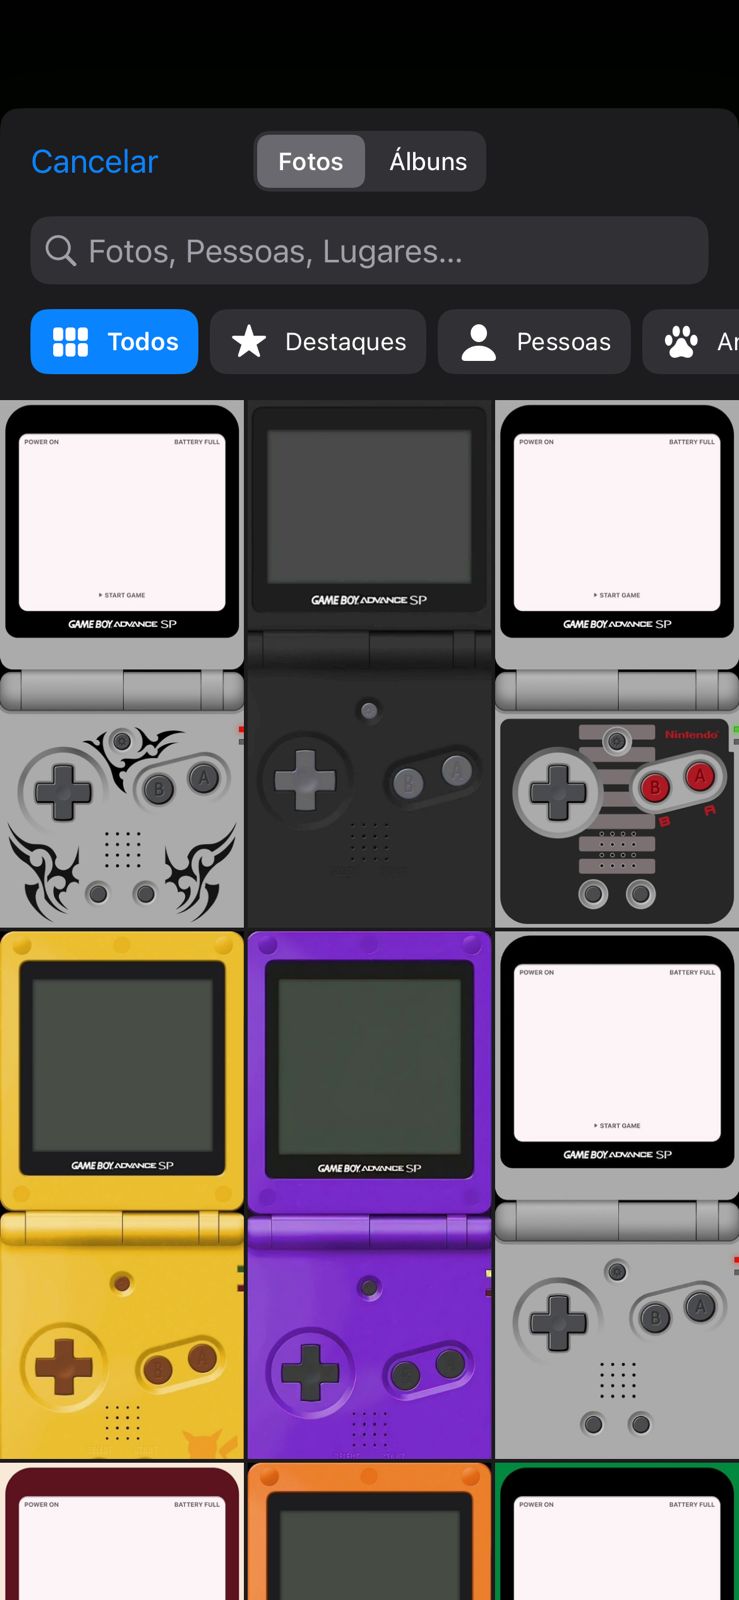 Wallpaper de Game Boy viraliza entre usuários de iPhone; veja onde baixar